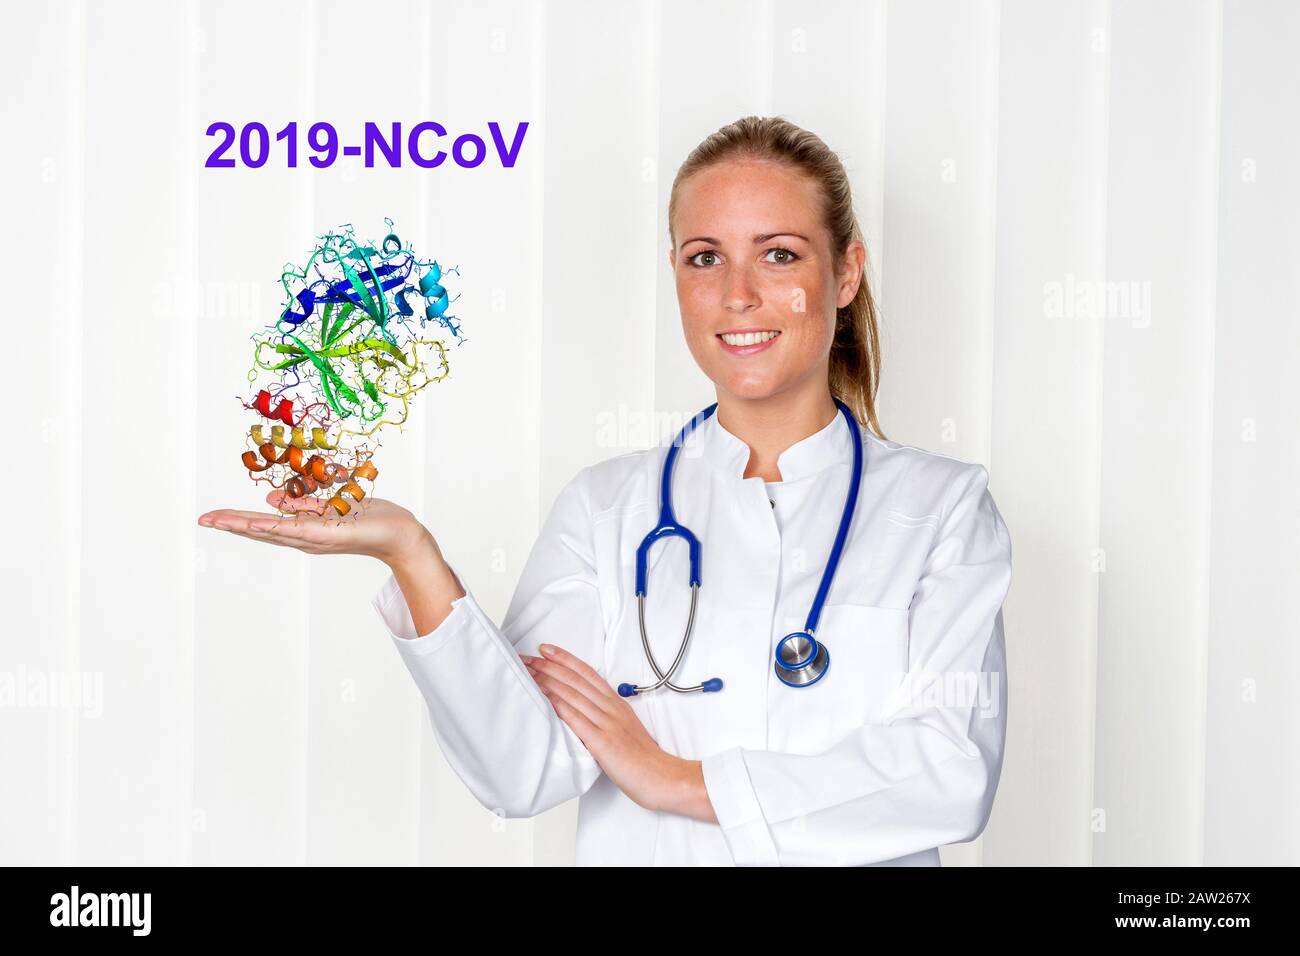 female doctor with corona virus in the hand Stock Photo